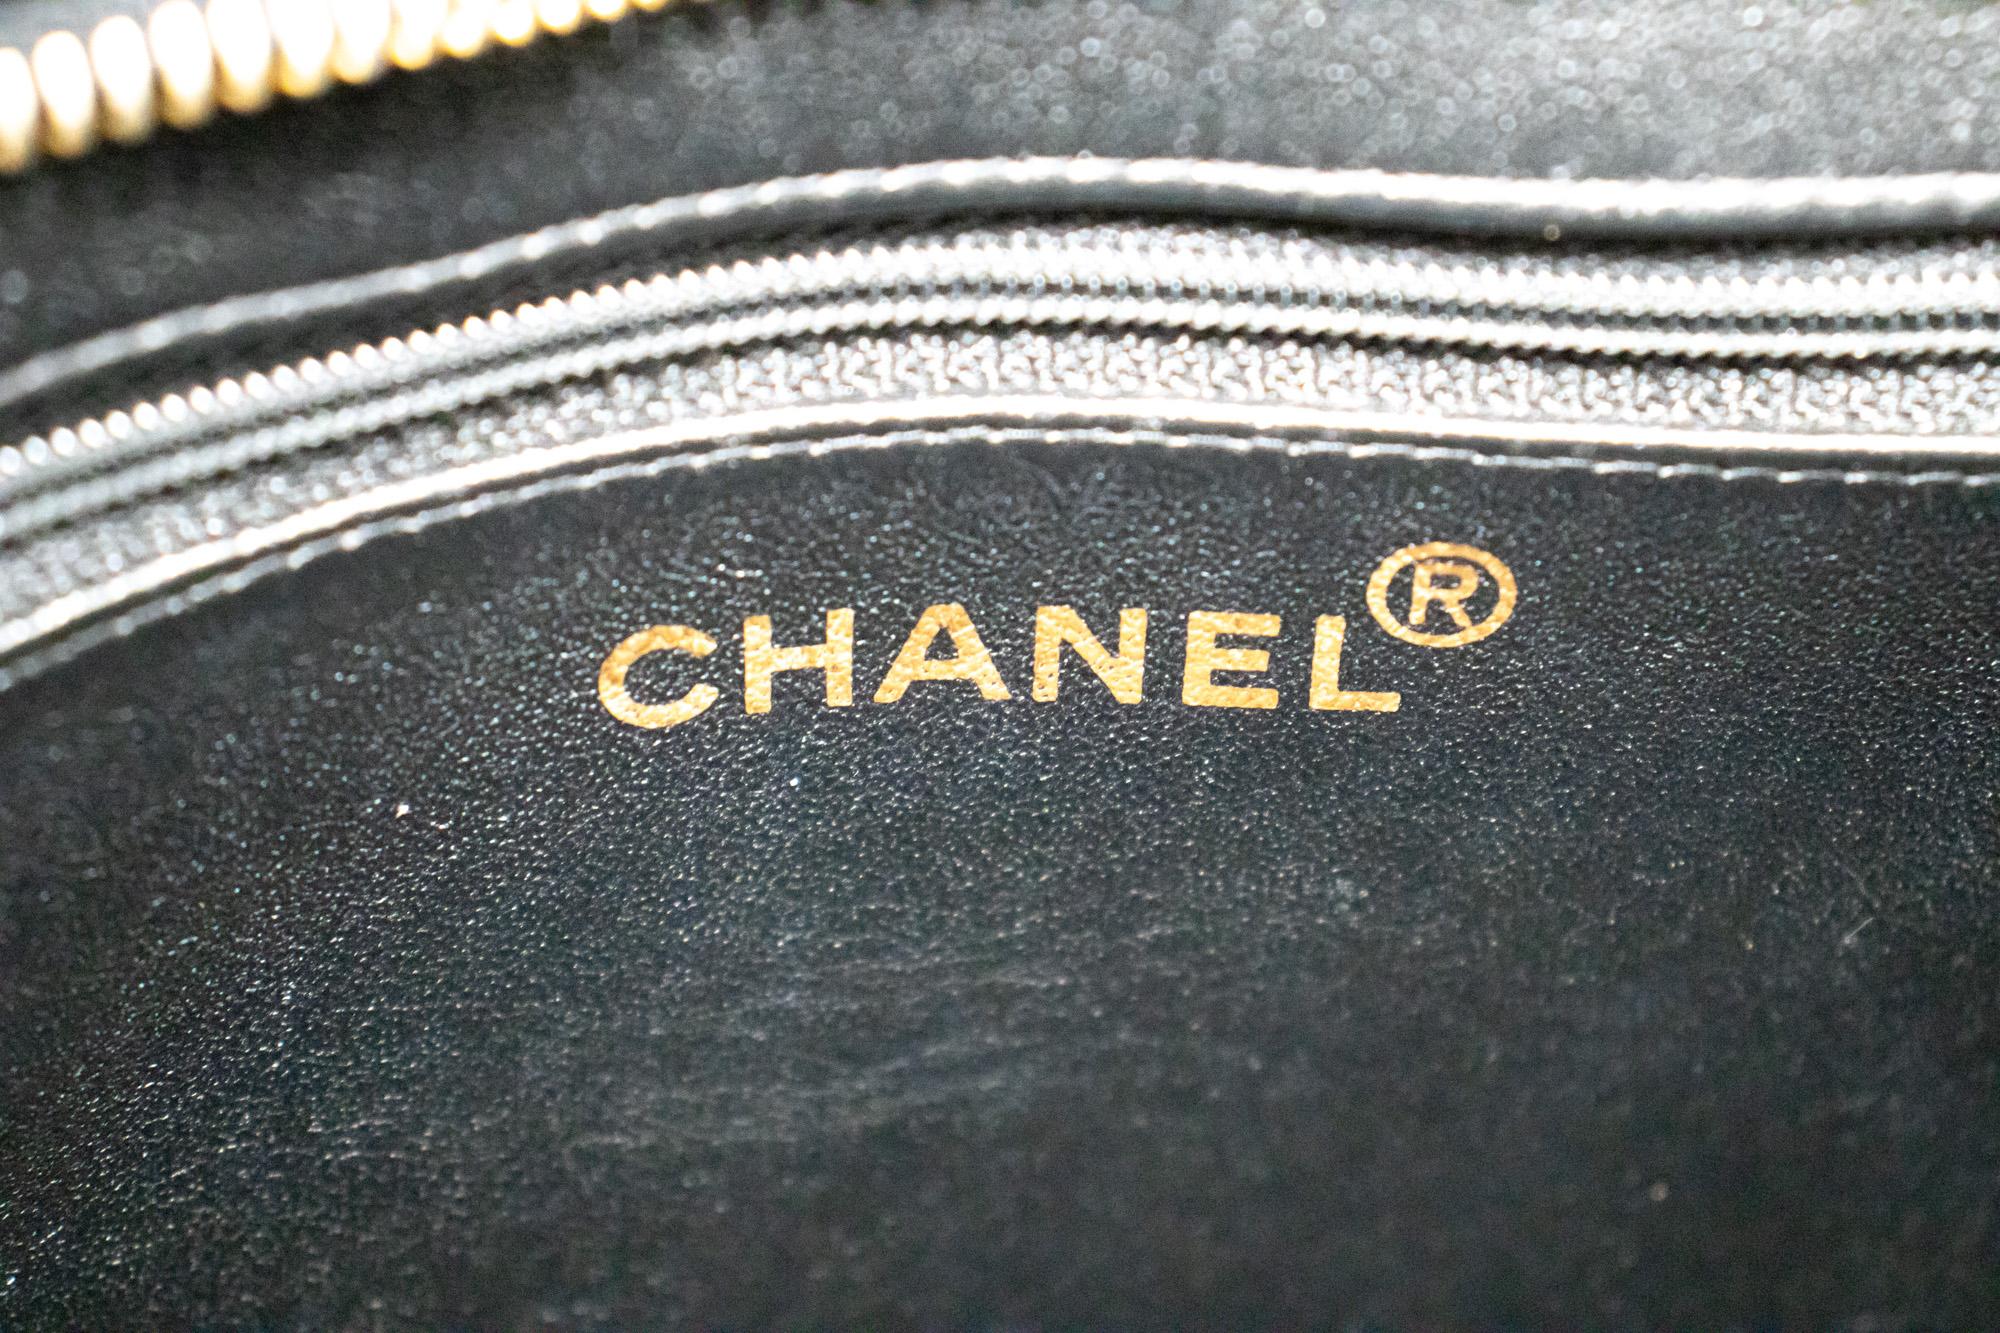 CHANEL Gold Medallion Caviar Shoulder Bag Grand Shopping Tote 3